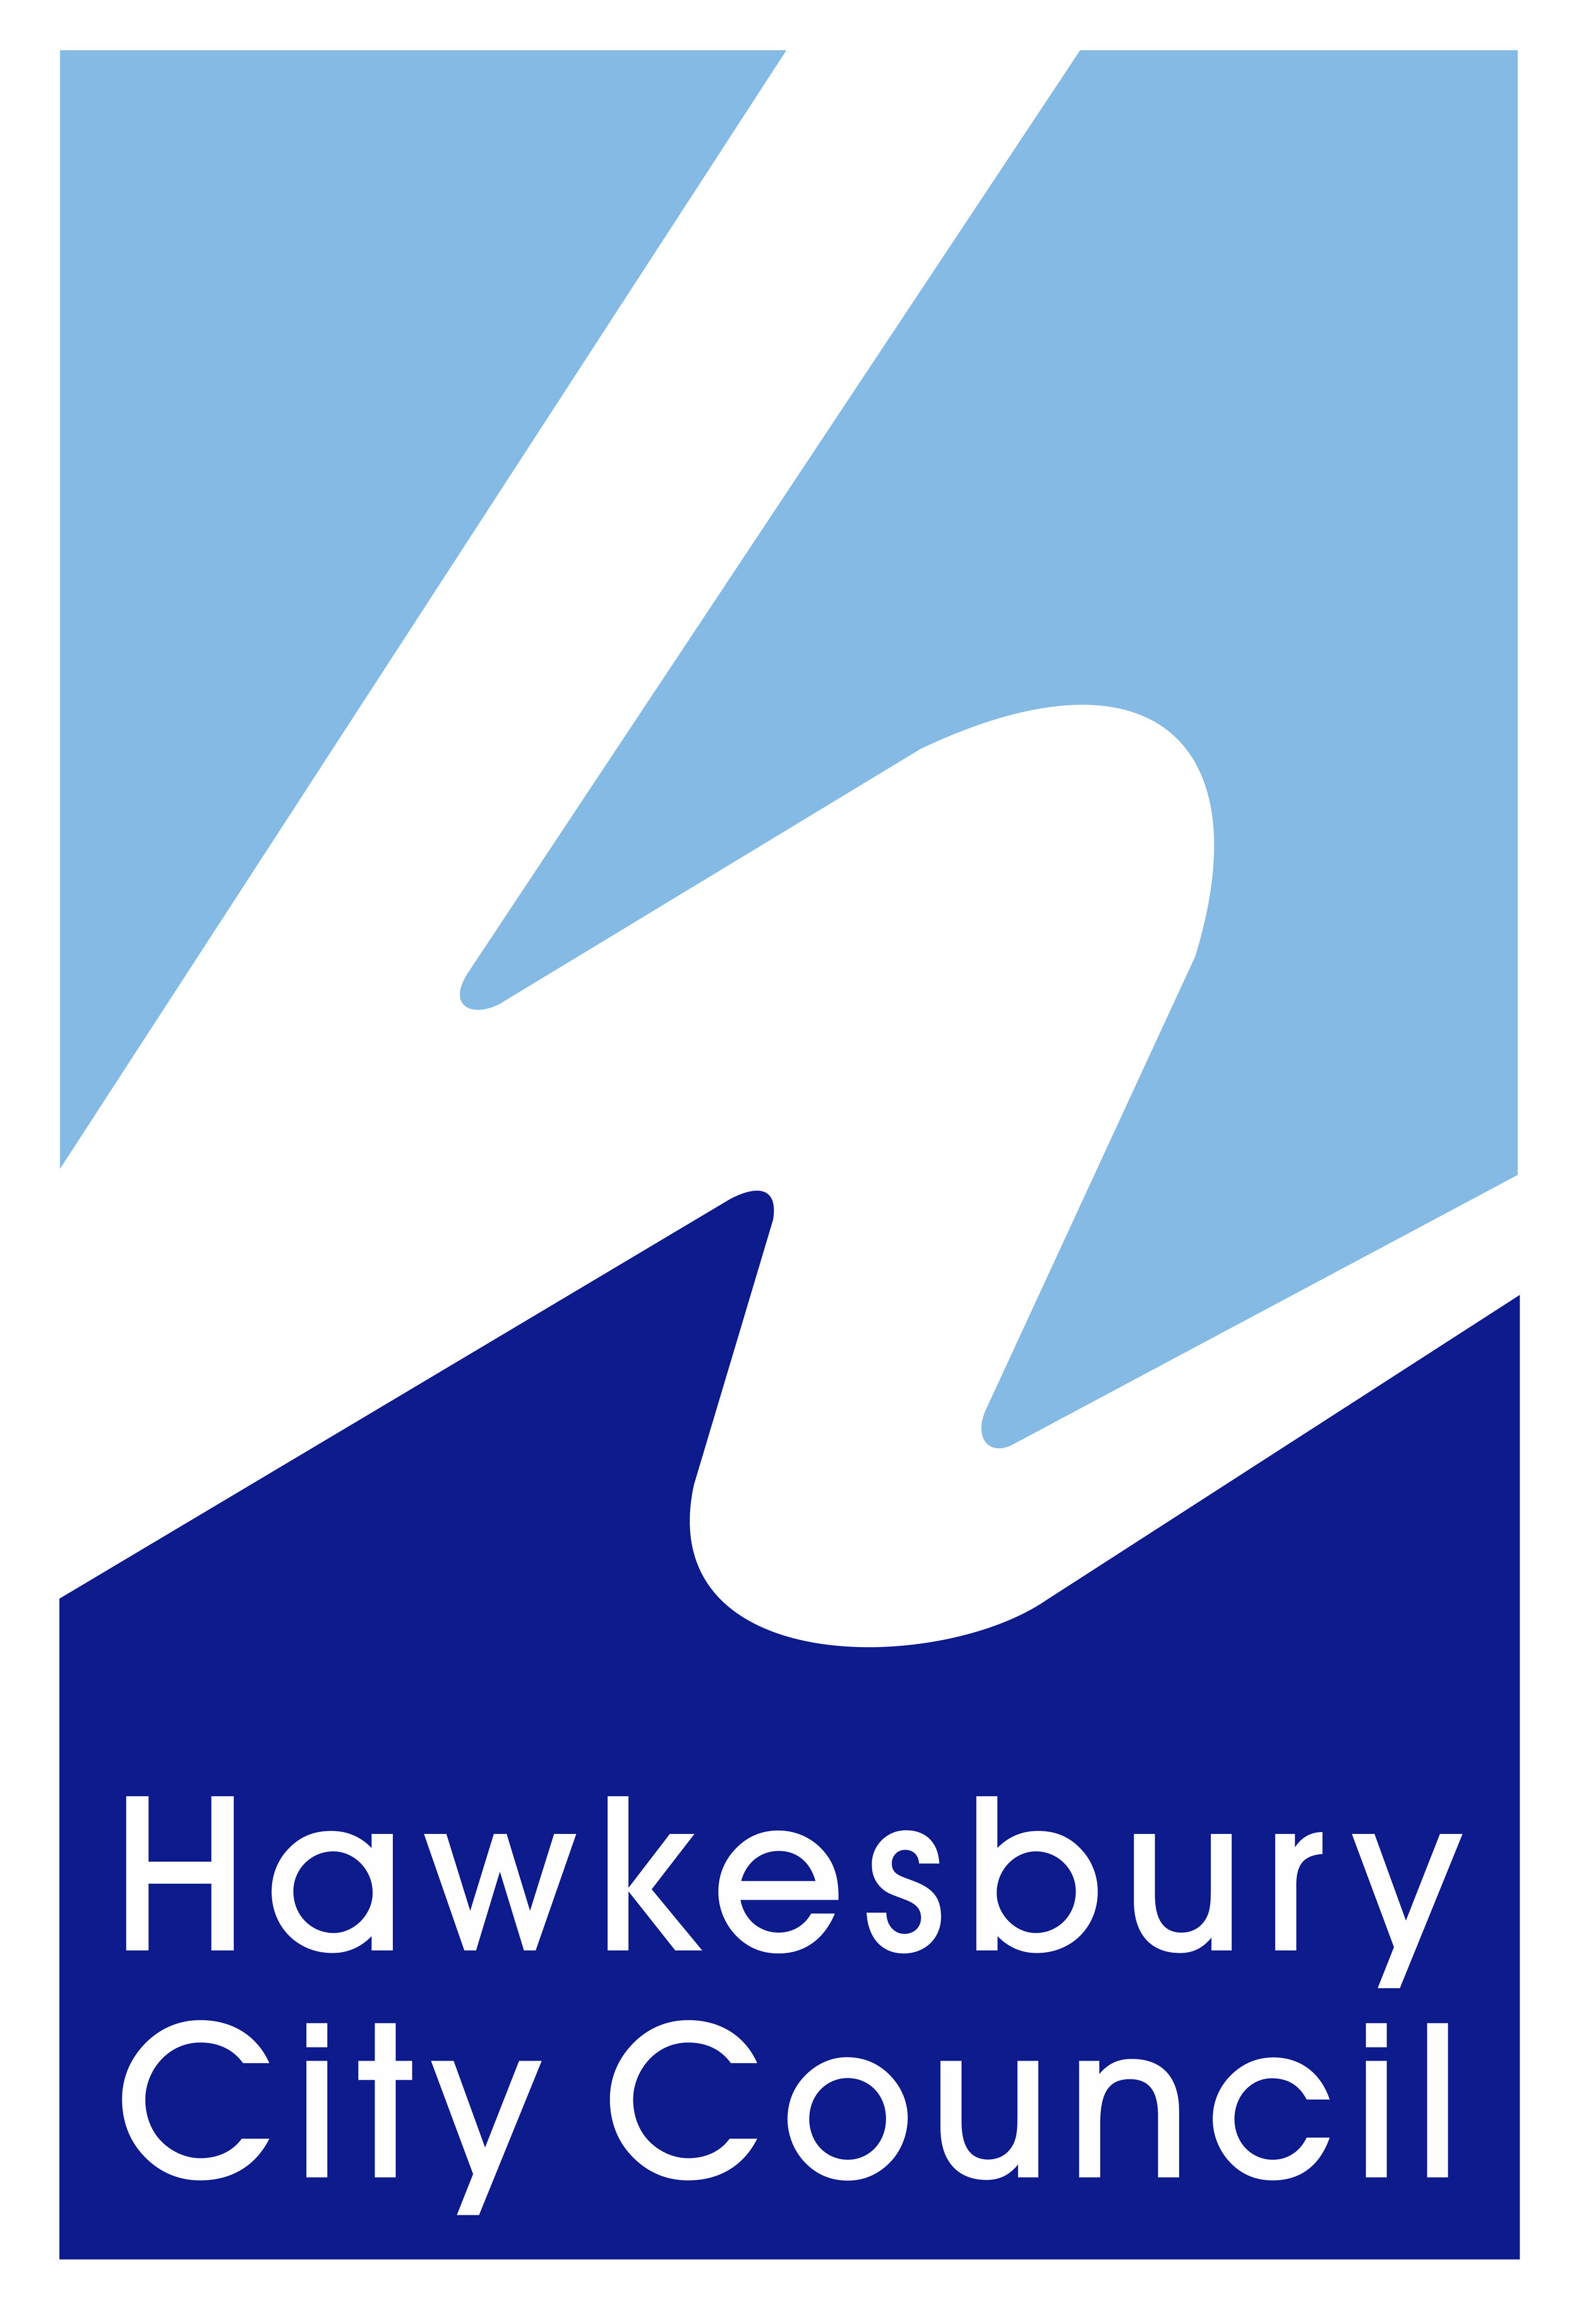 Hawkesbury City Council - Master Horizental Logo.jpg